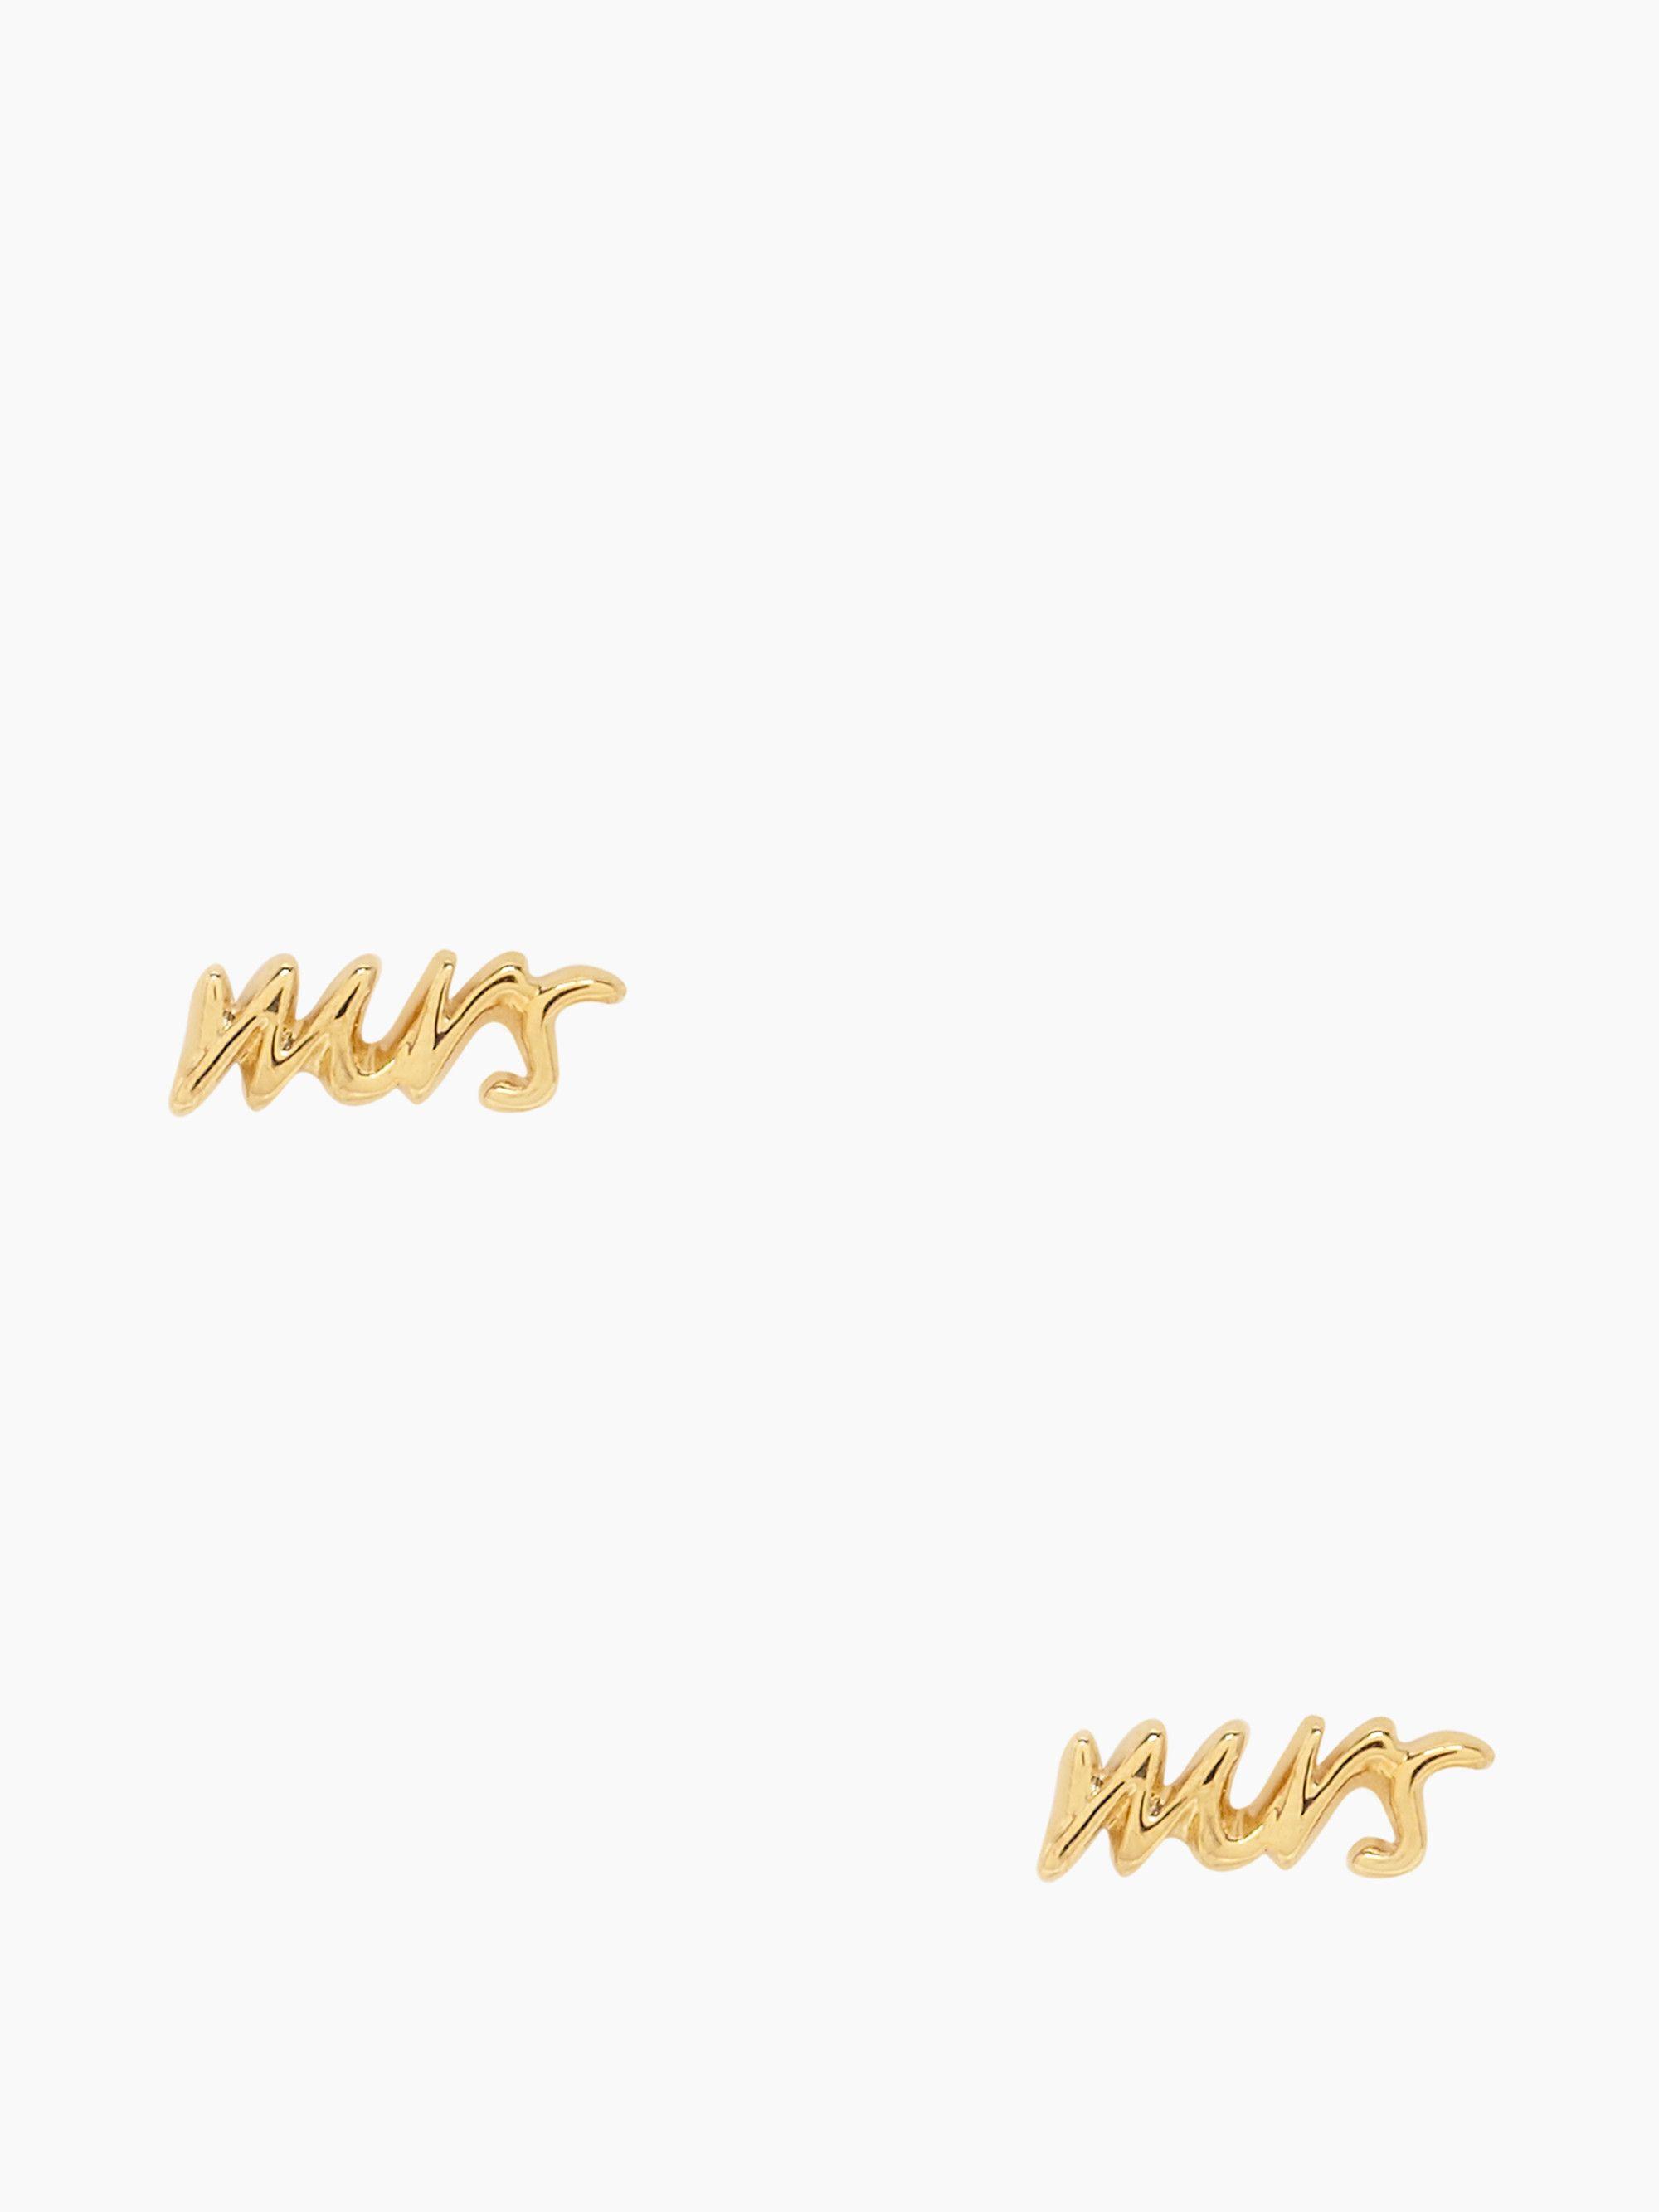 Gold Kate Spade Logo - say yes mrs studs. Kate Spade New York